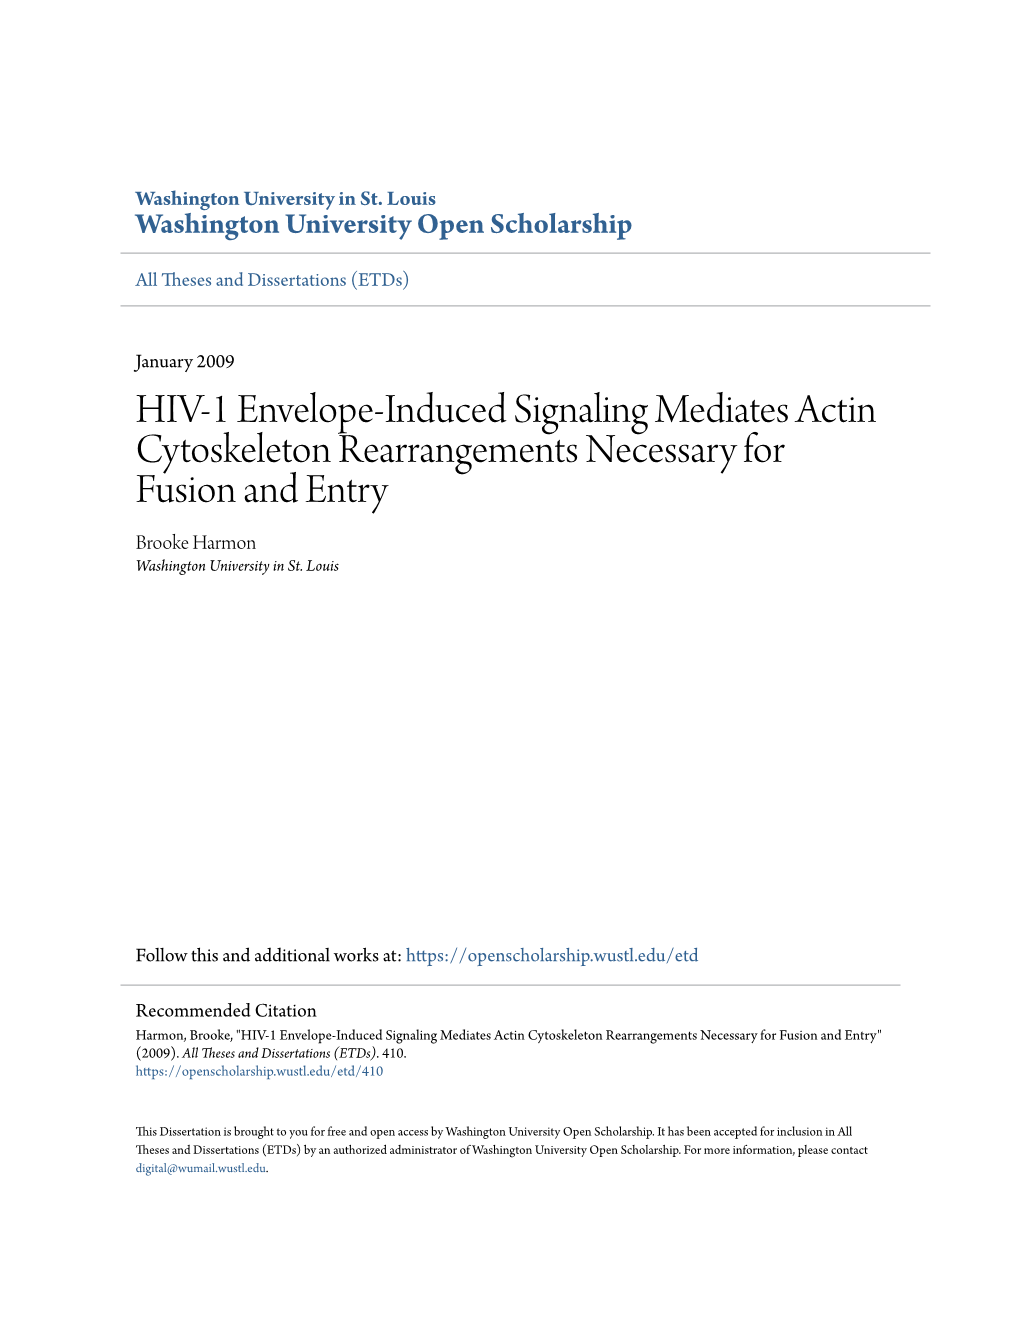 HIV-1 Envelope-Induced Signaling Mediates Actin Cytoskeleton Rearrangements Necessary for Fusion and Entry Brooke Harmon Washington University in St